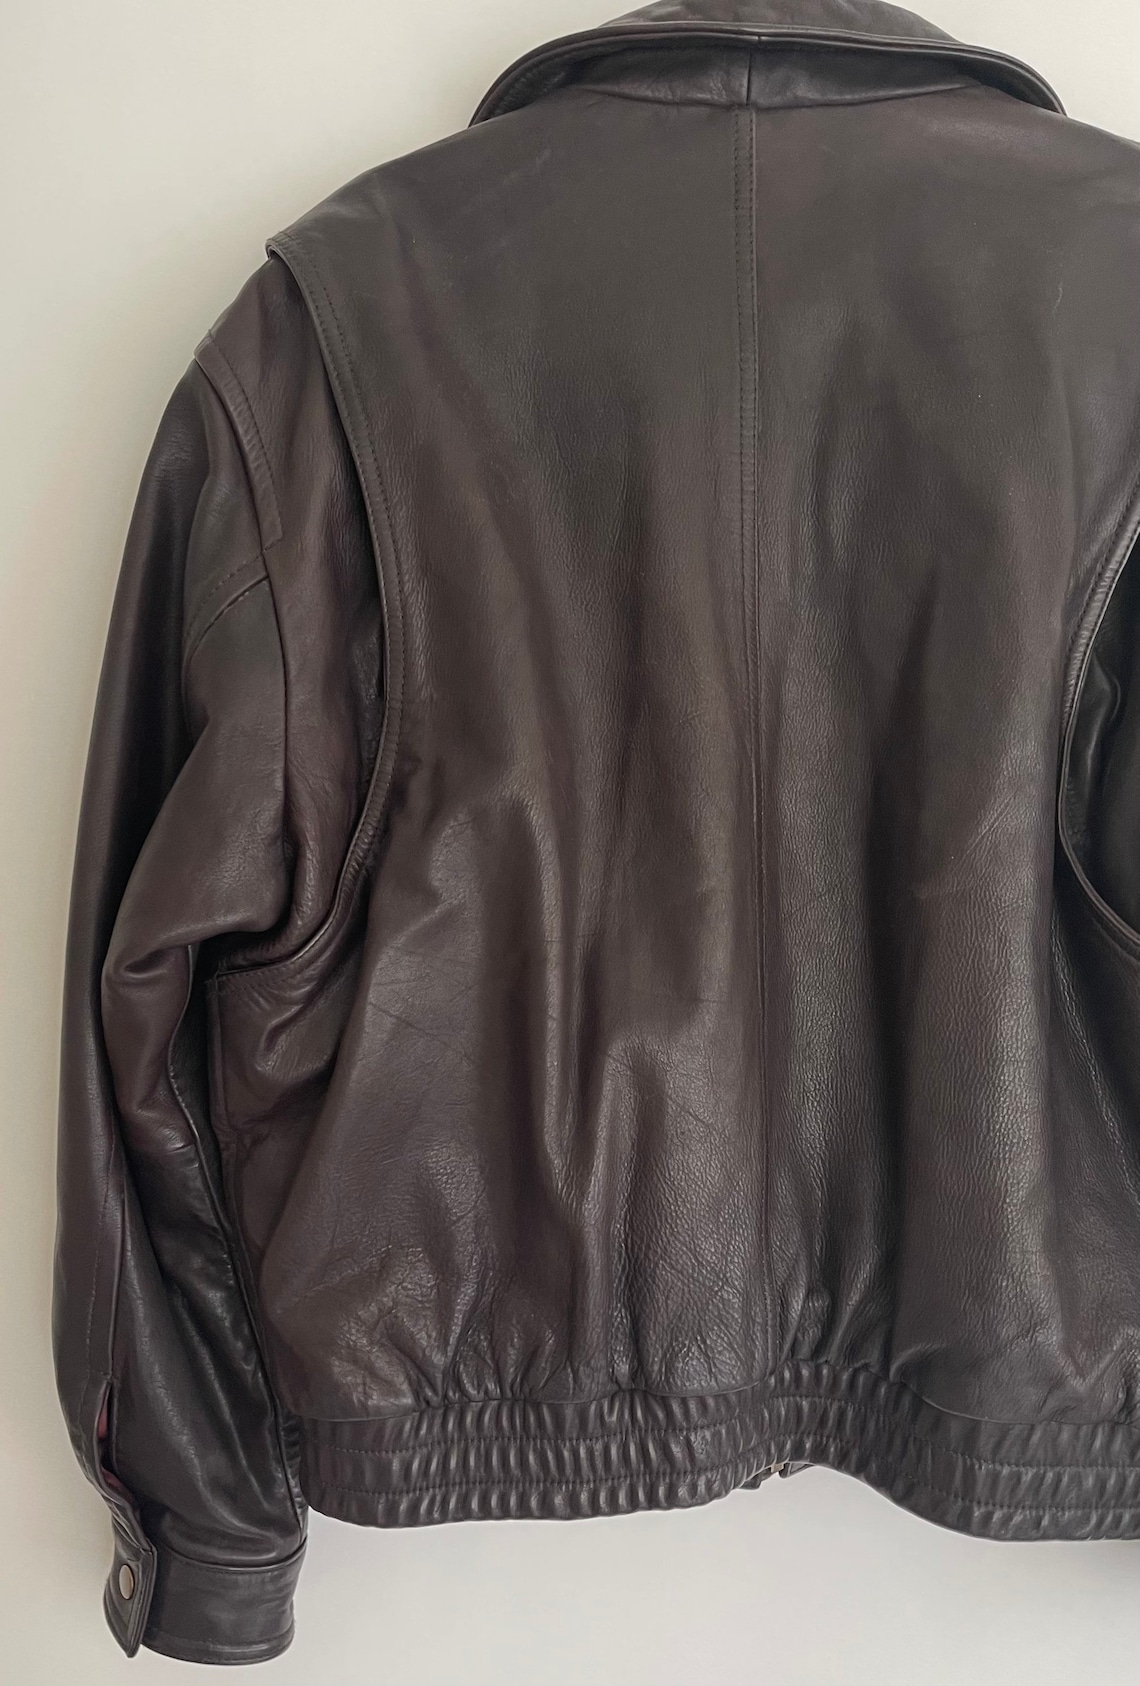 Mens Leather Bomber Jacket Vintage 80s Banana Republic Flight | Etsy